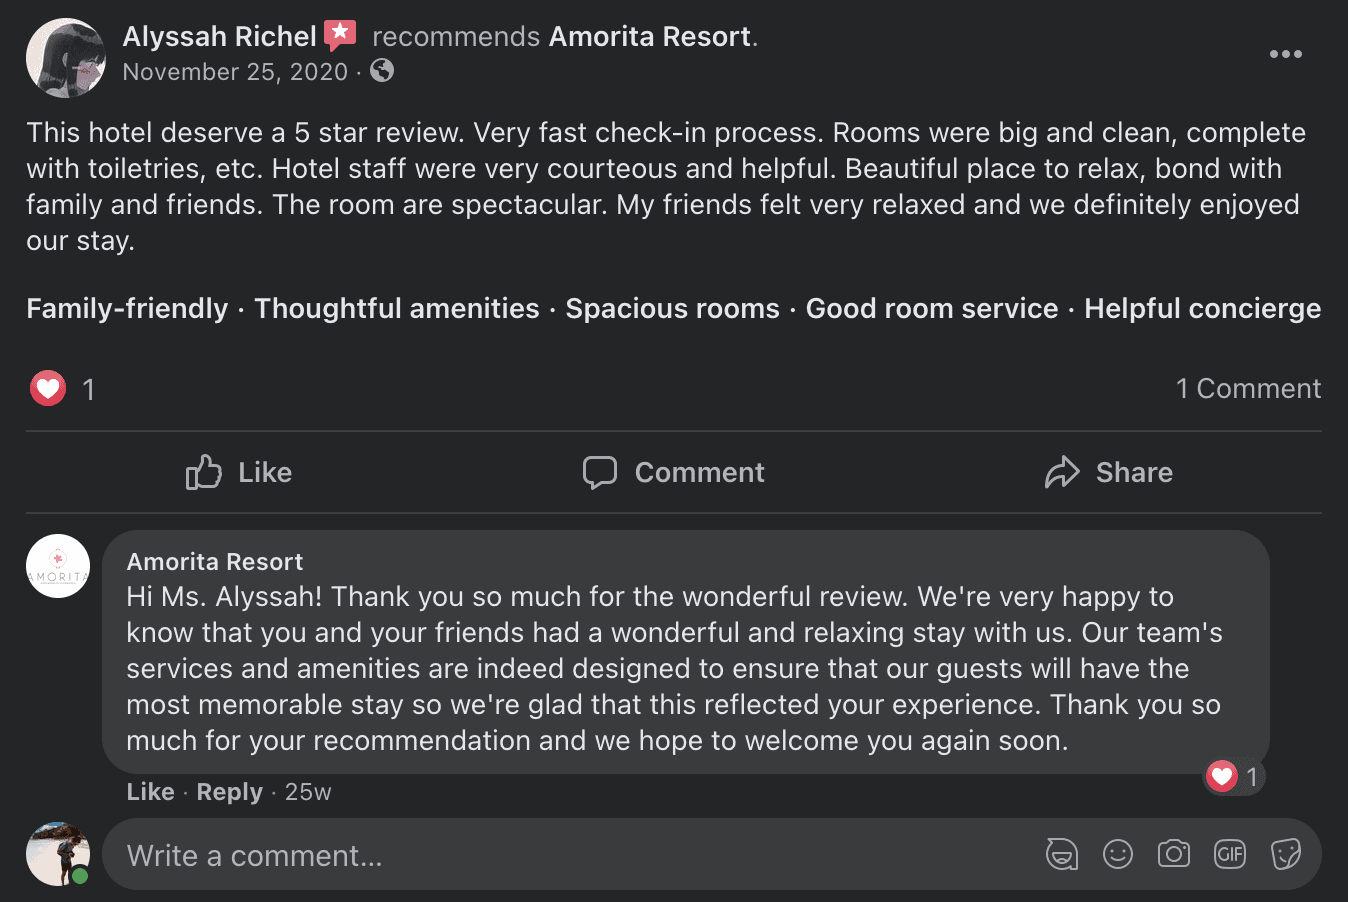 responding to positive reviews